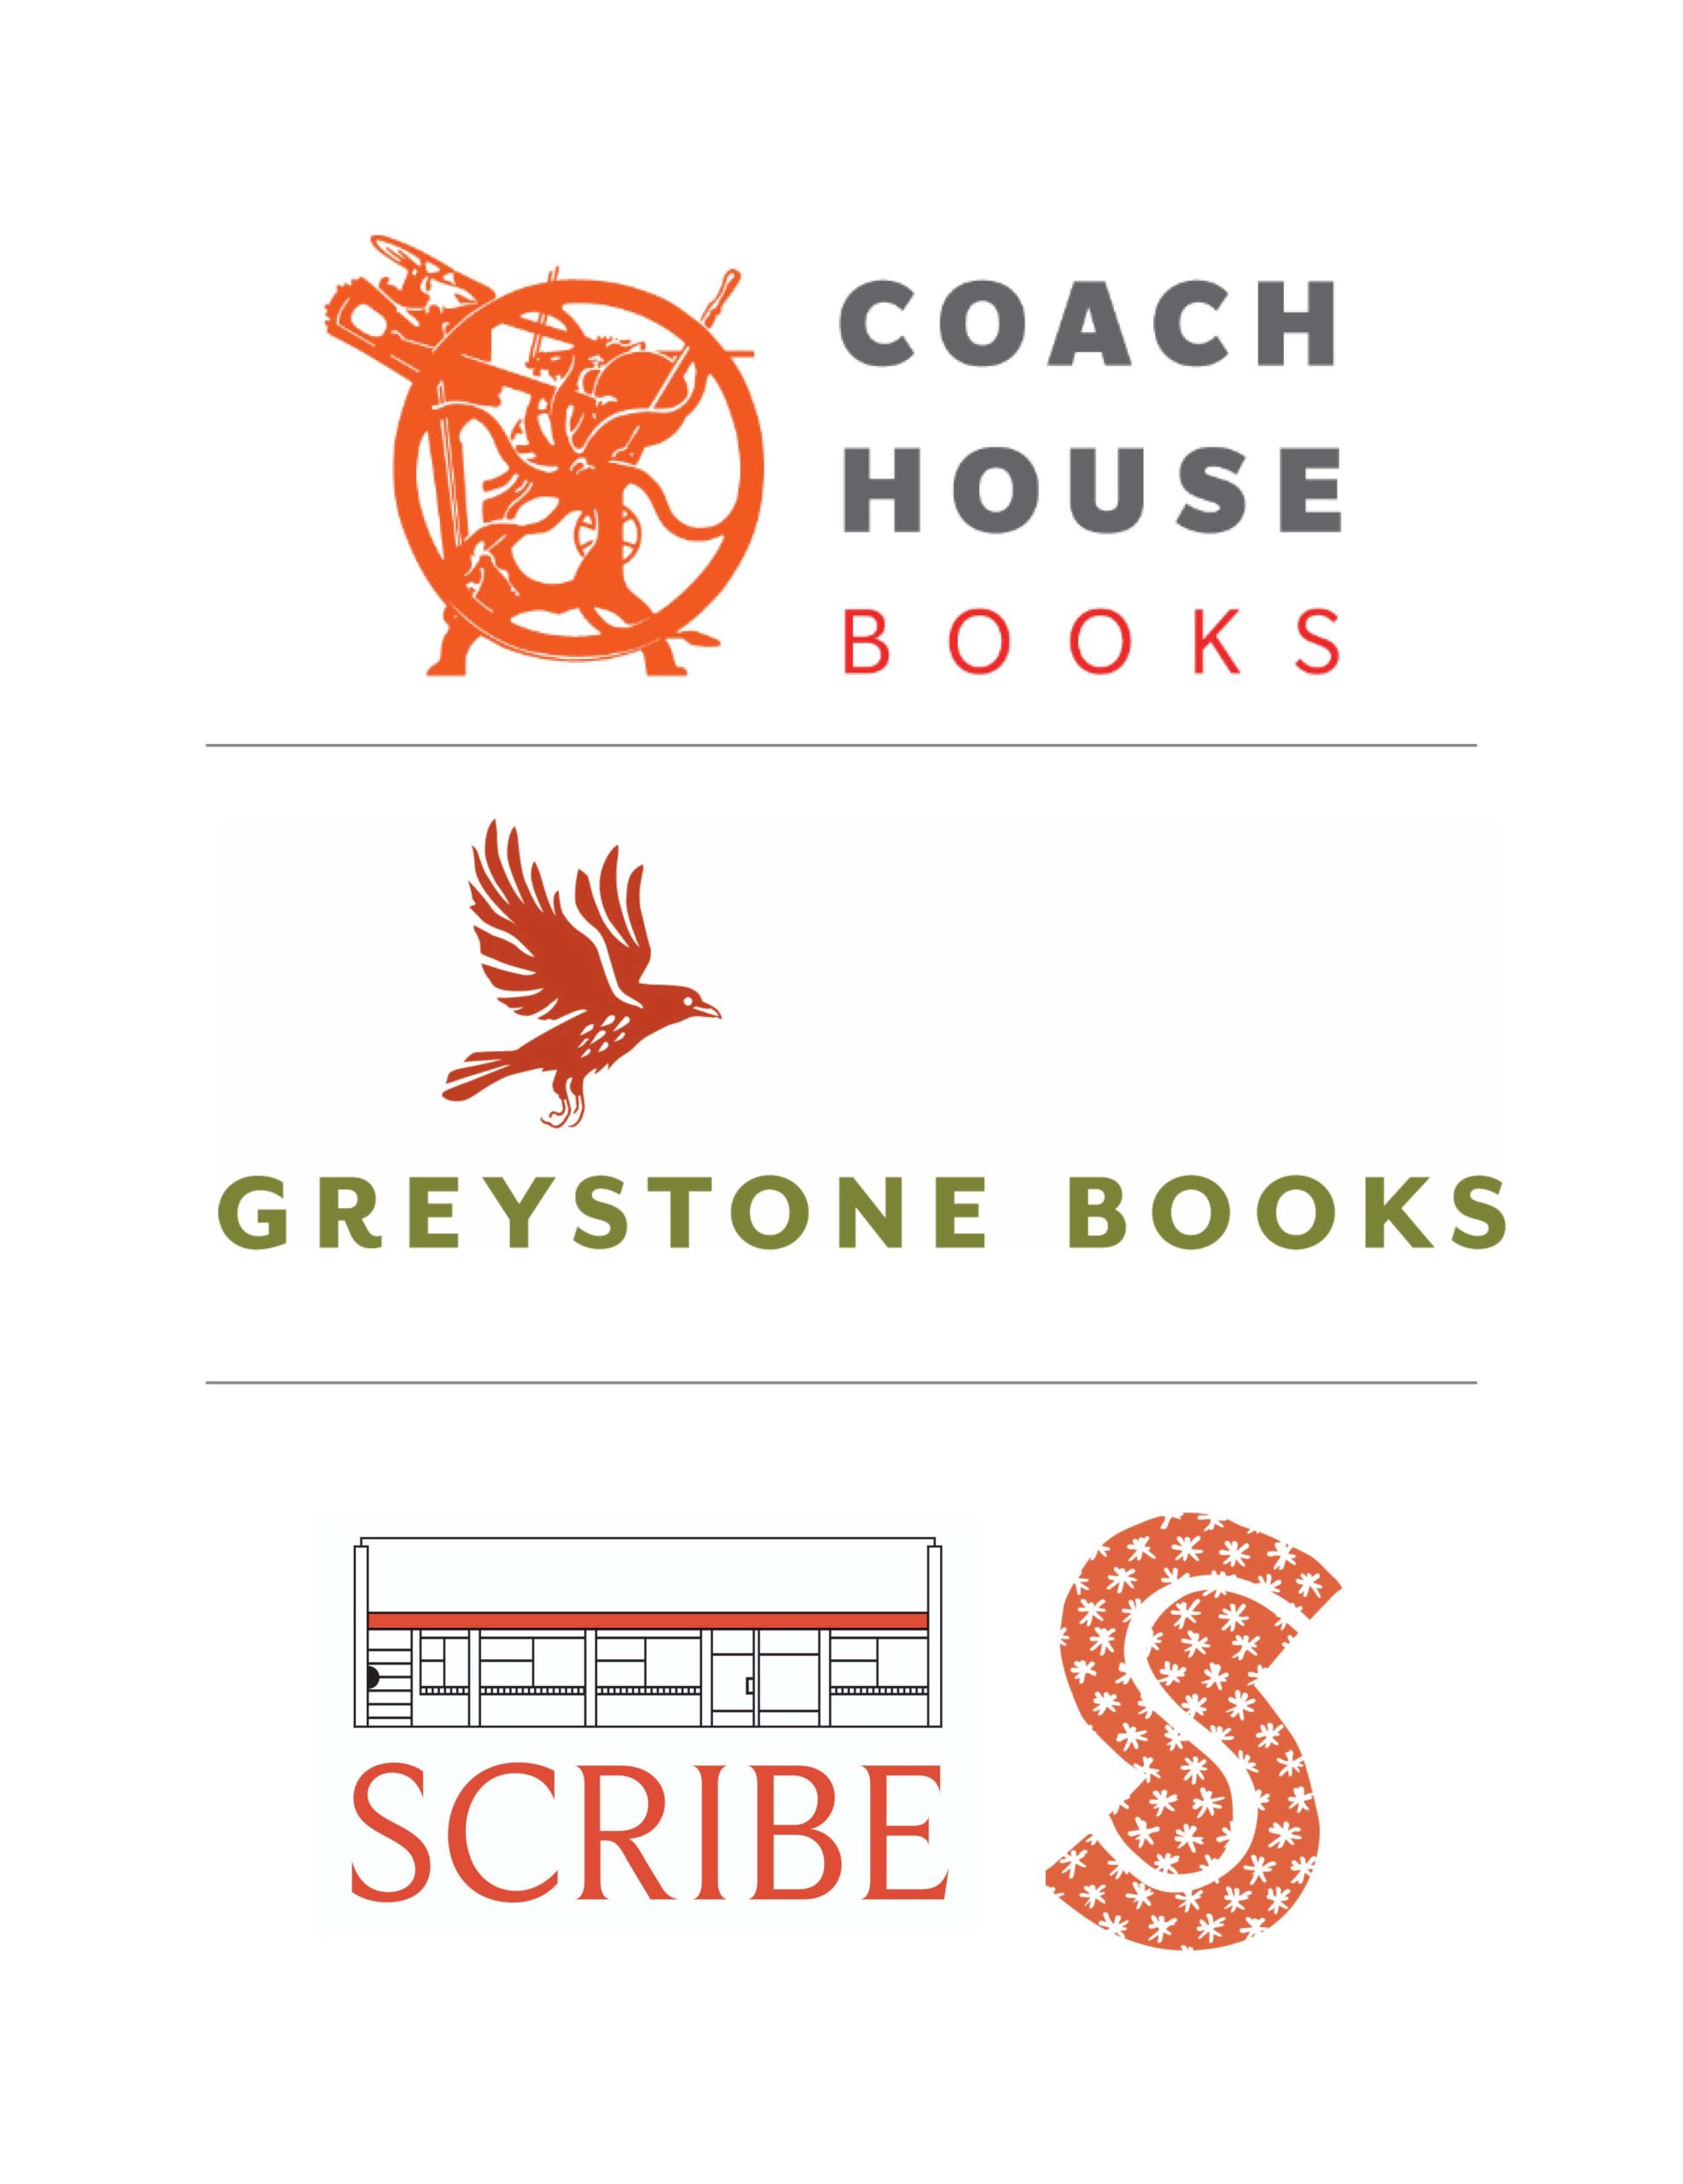 CHB-Greystone-Scribe-Logos-for-Bookfest-c085dec49d56ed57033a3d8722d02526